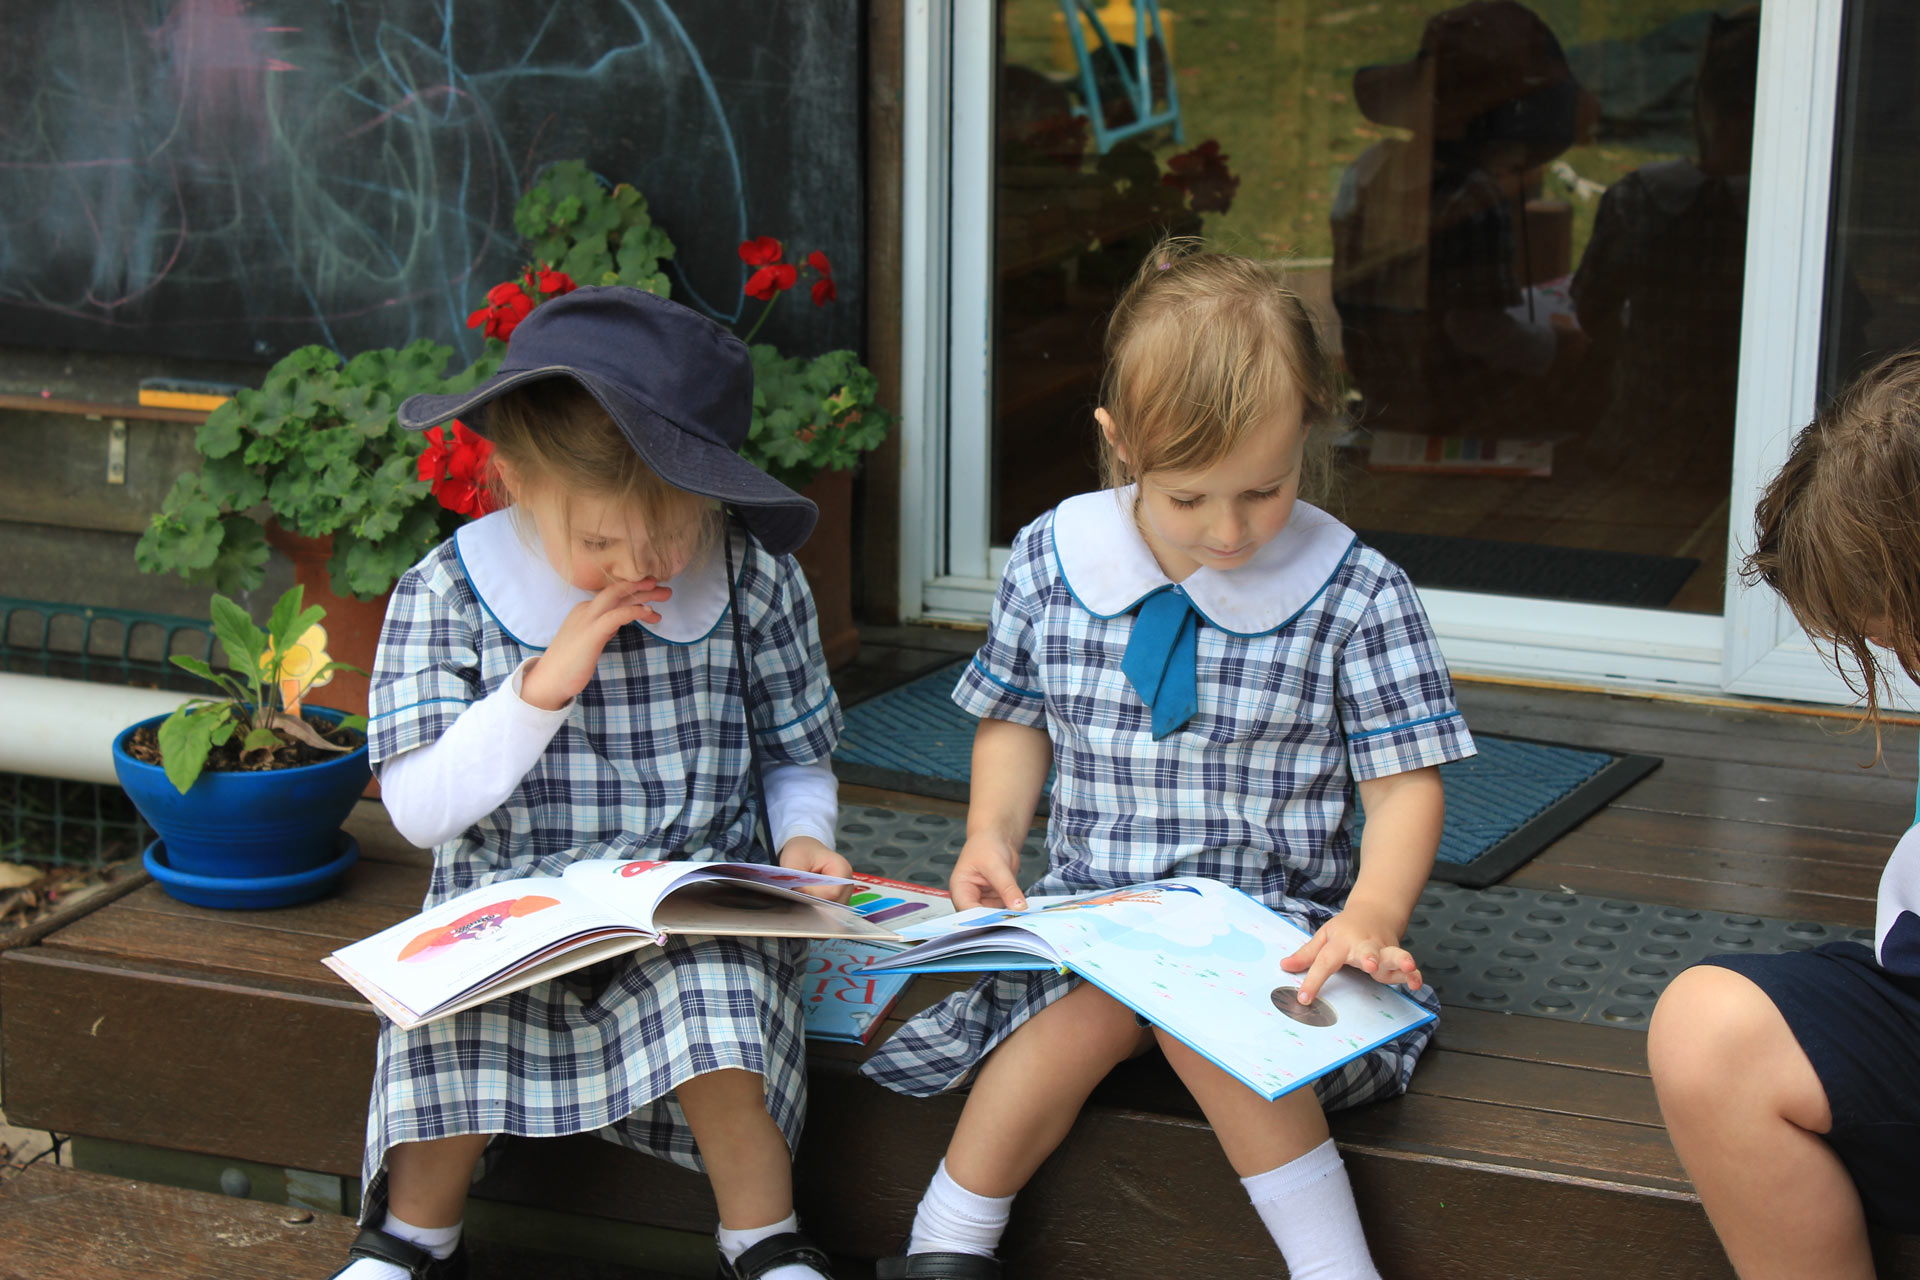 busting the myths around Montessori